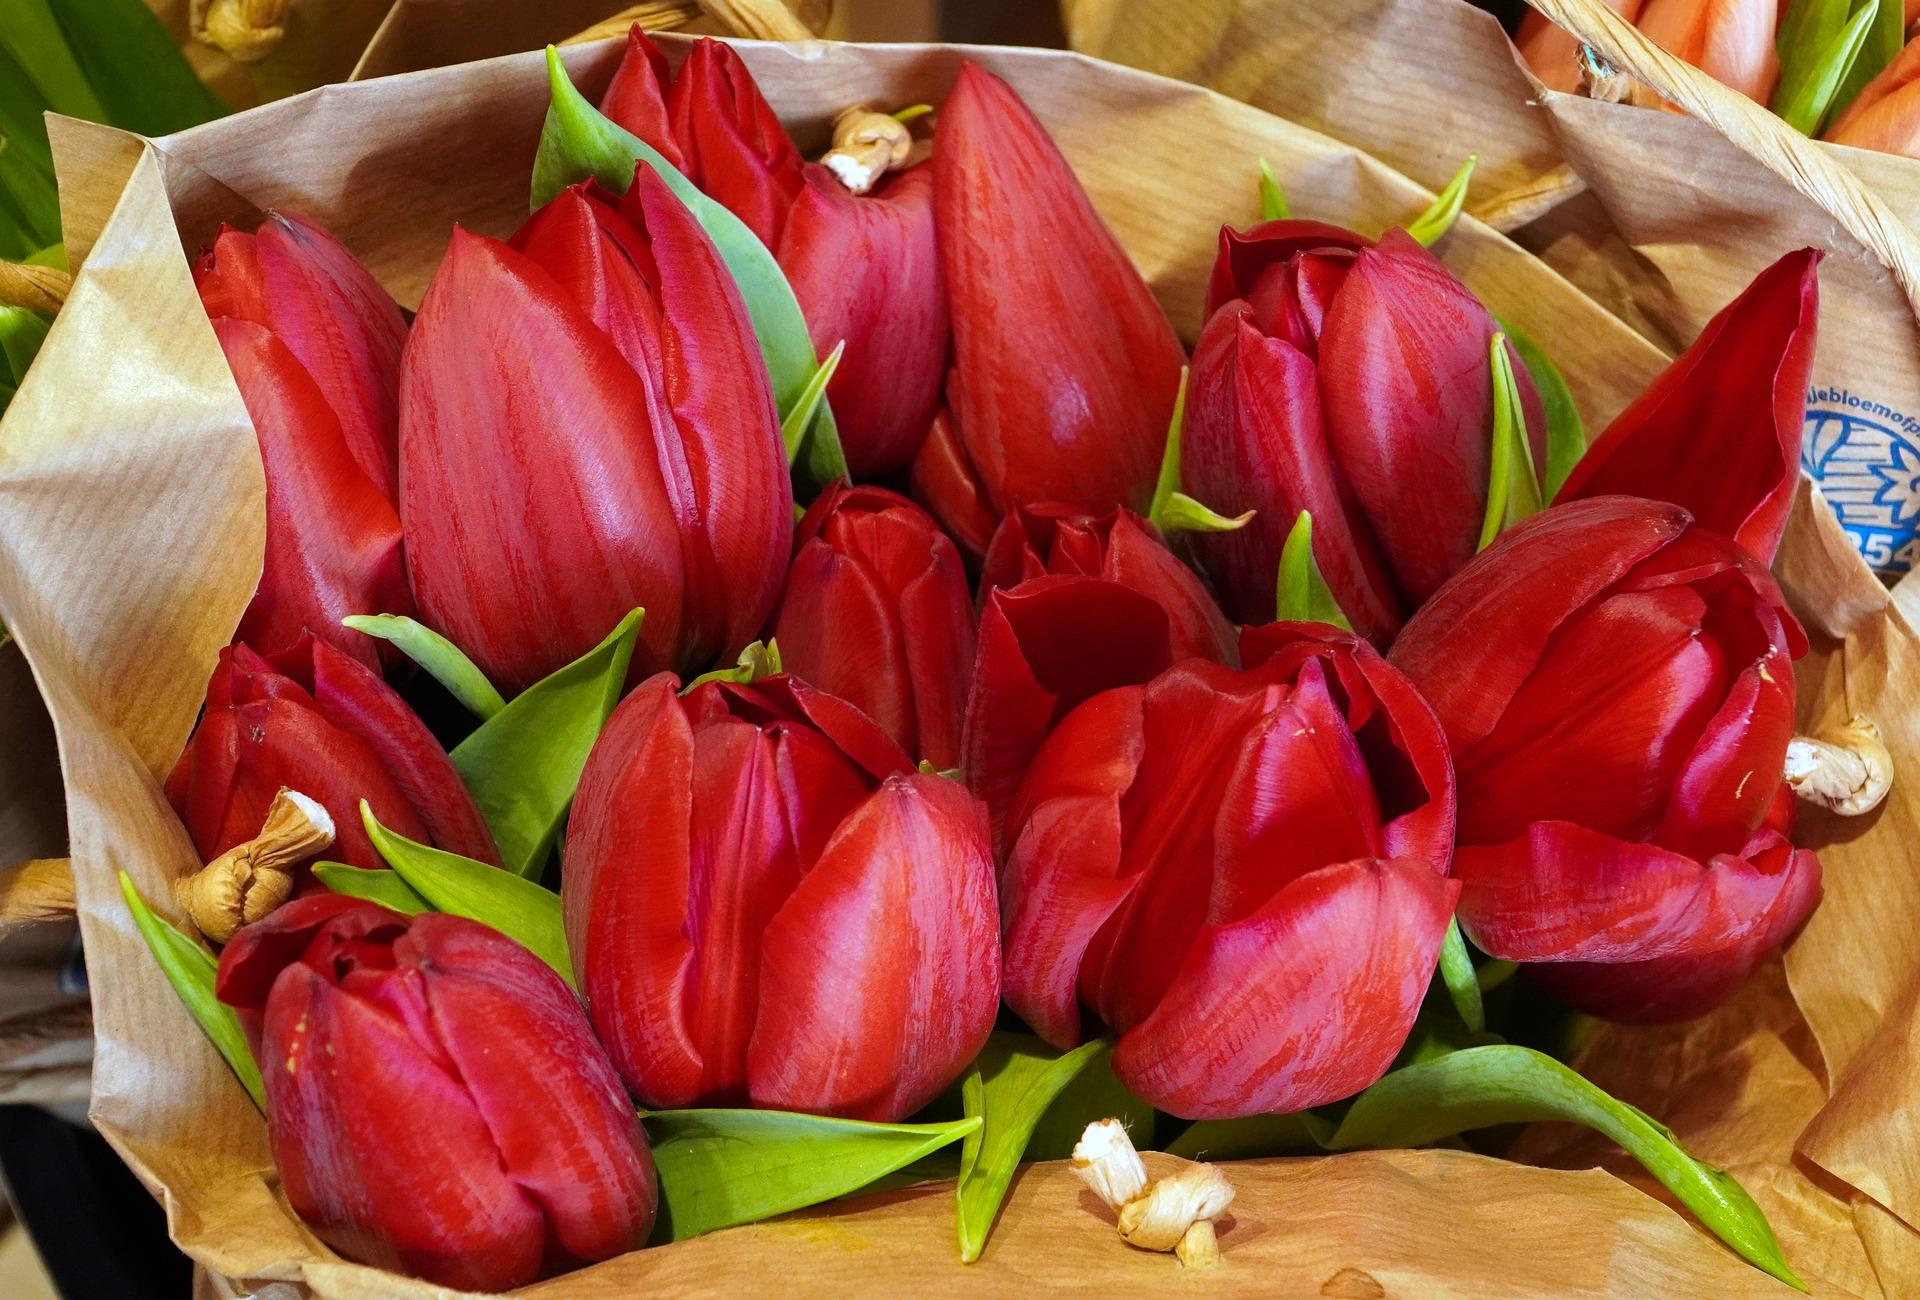 Tulip Triumph 'Oscar' - Tulip from Leo Berbee Bulb Company